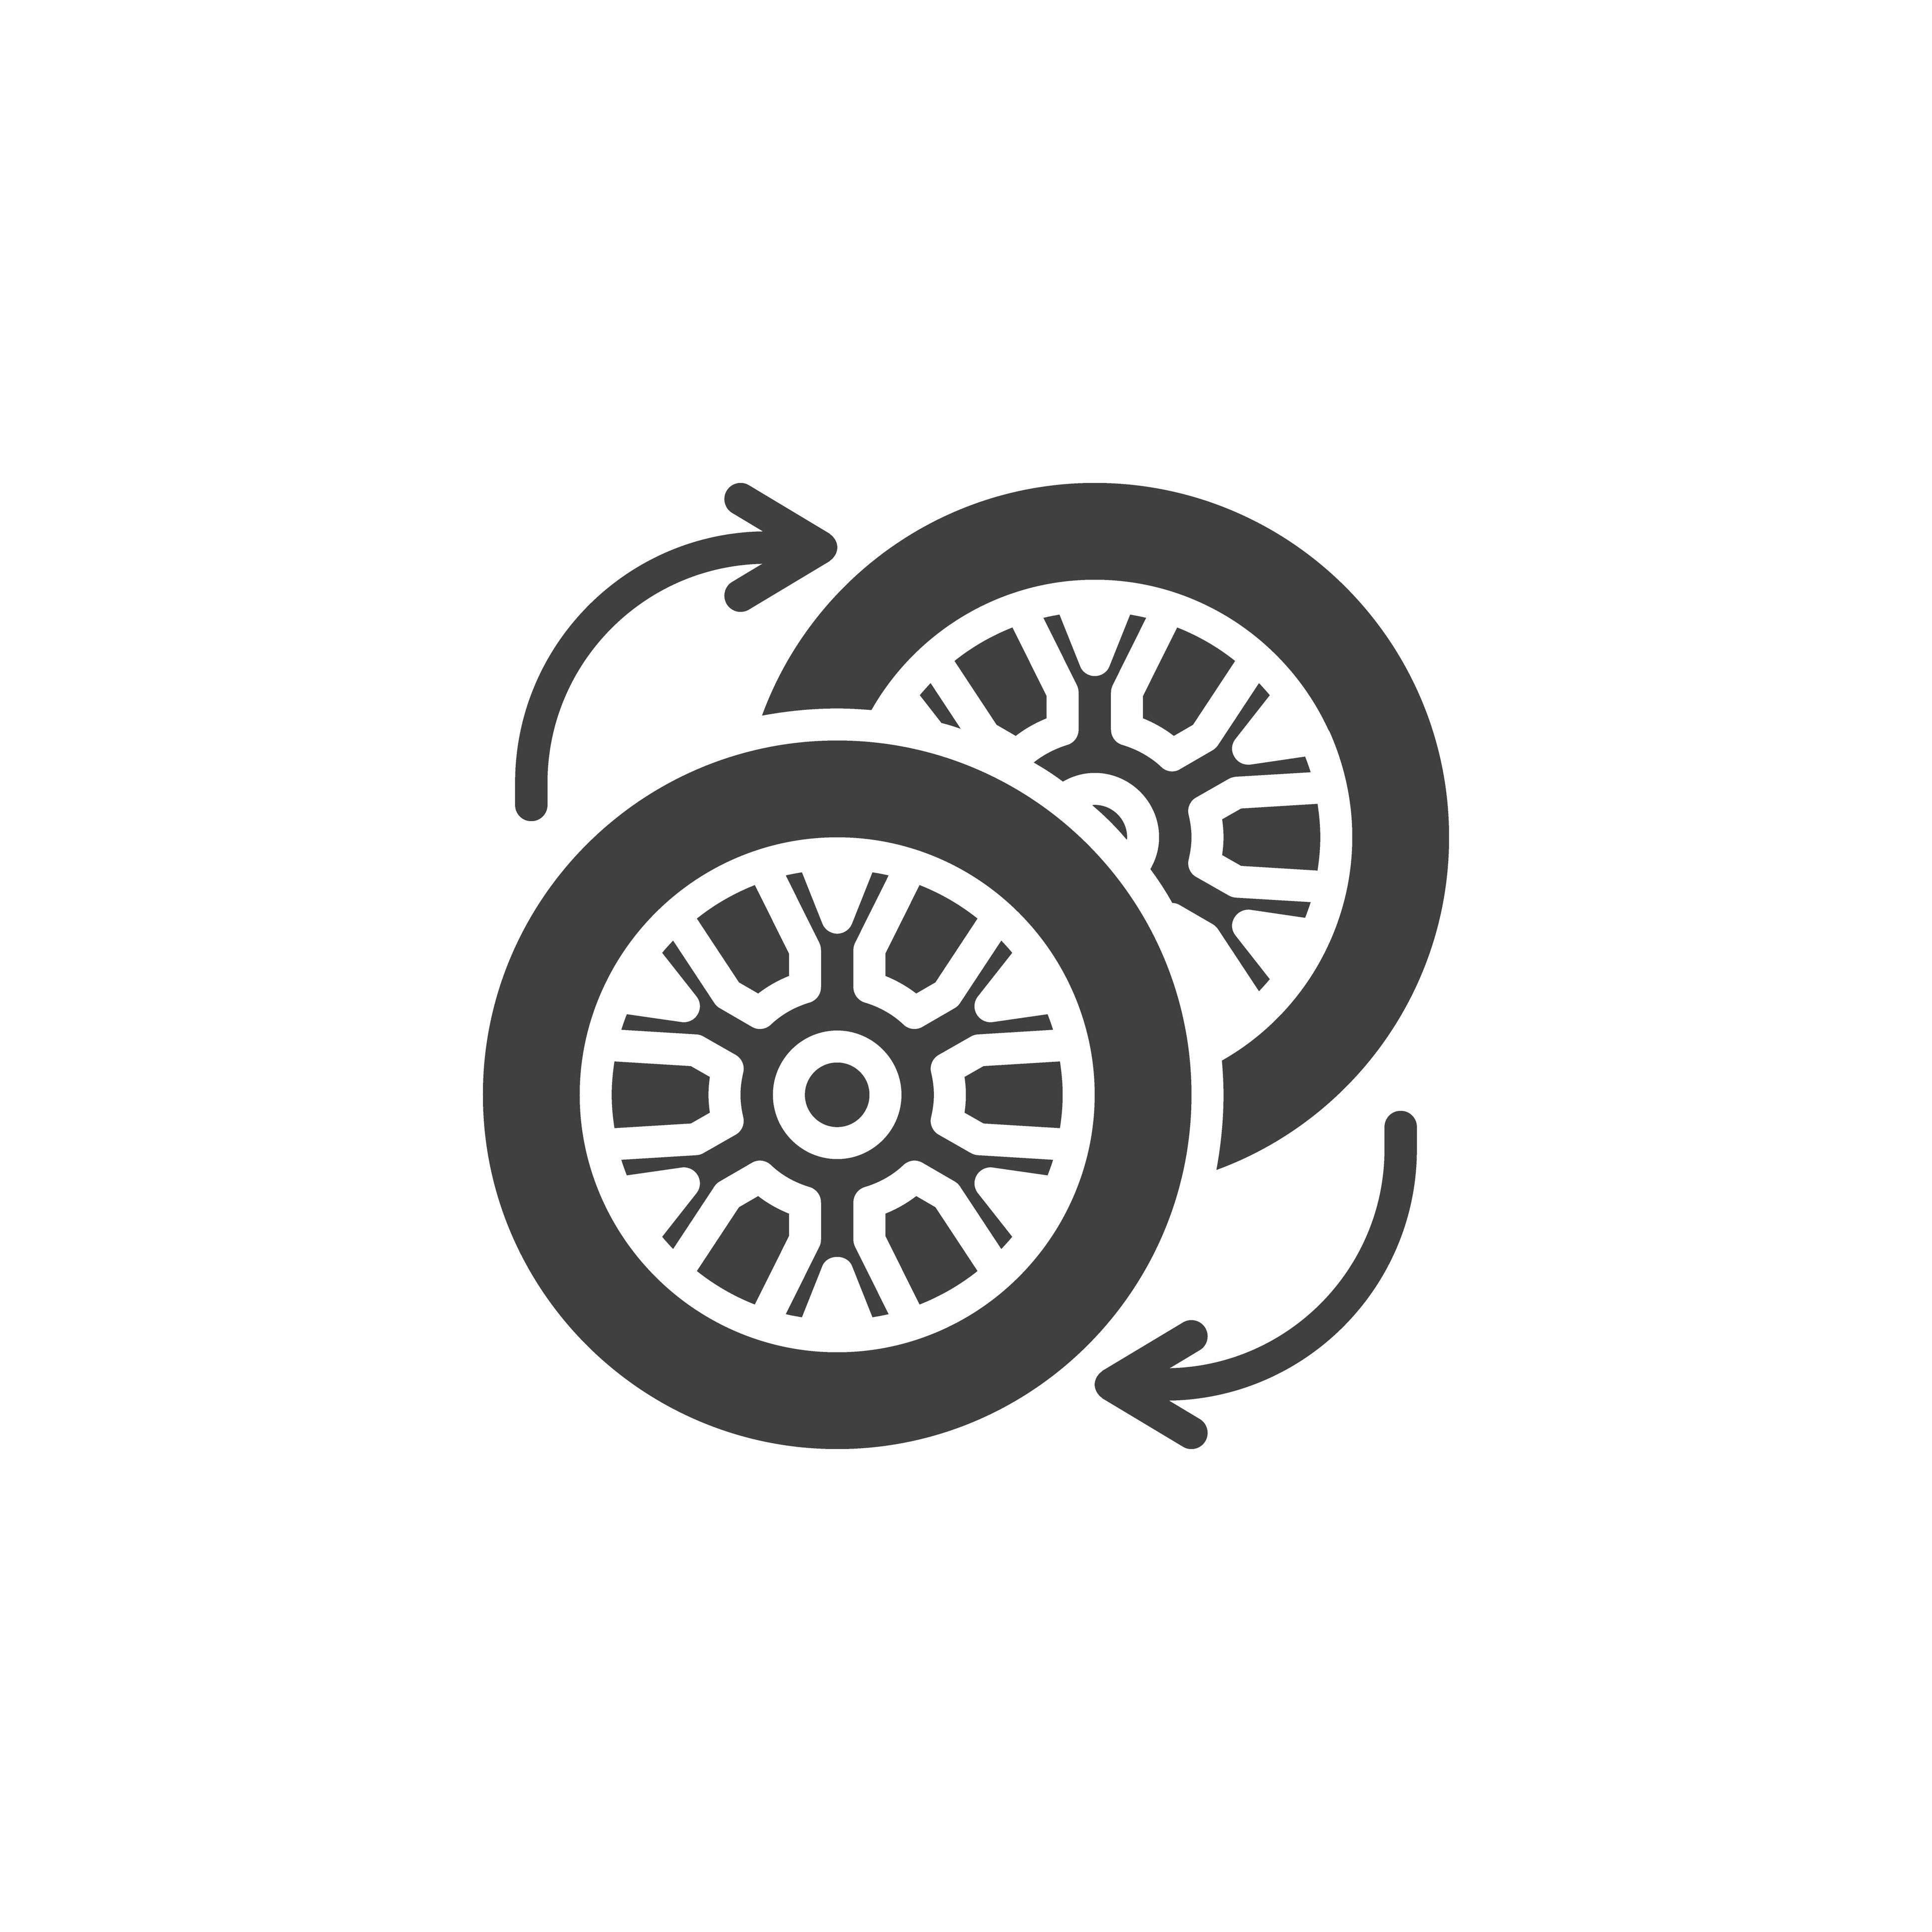 Tire Rotation | Toyota of Boardman